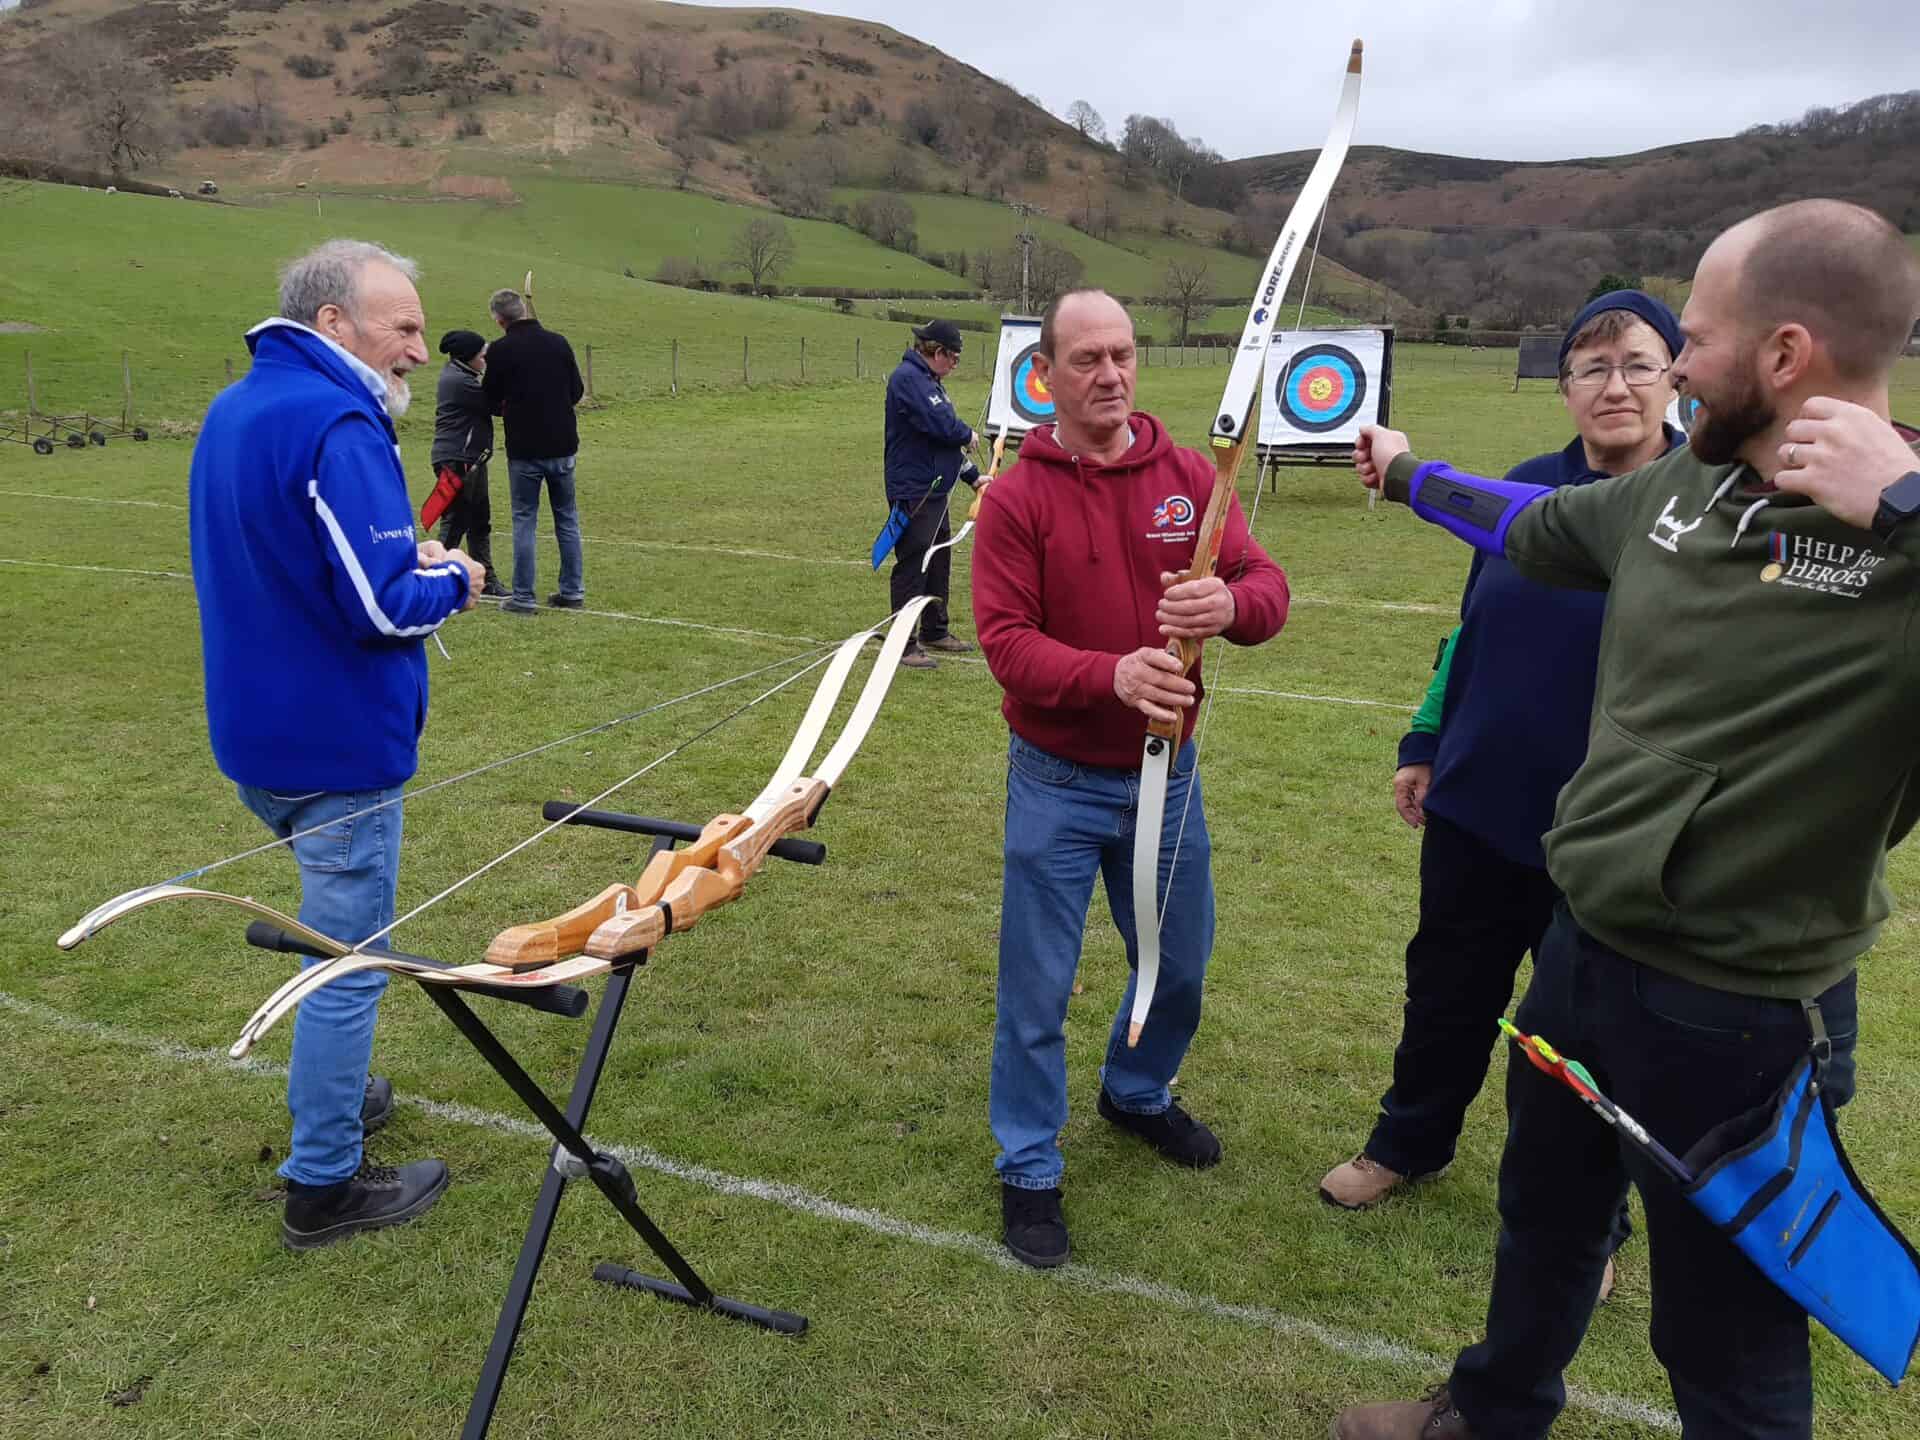 Archery beginners course for Help for Heroes inspires veterans